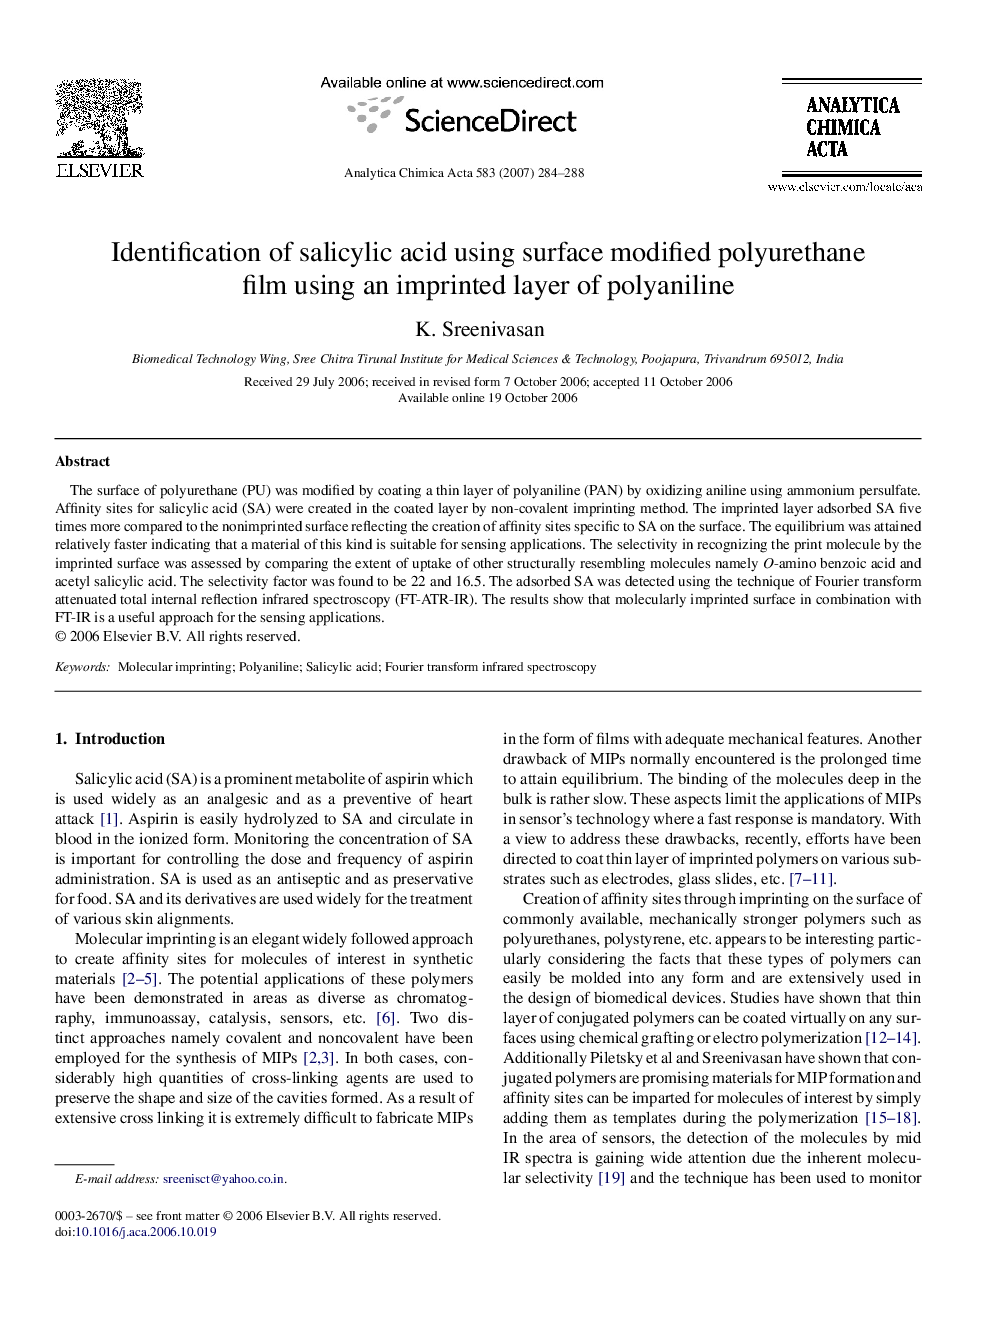 Identification of salicylic acid using surface modified polyurethane film using an imprinted layer of polyaniline